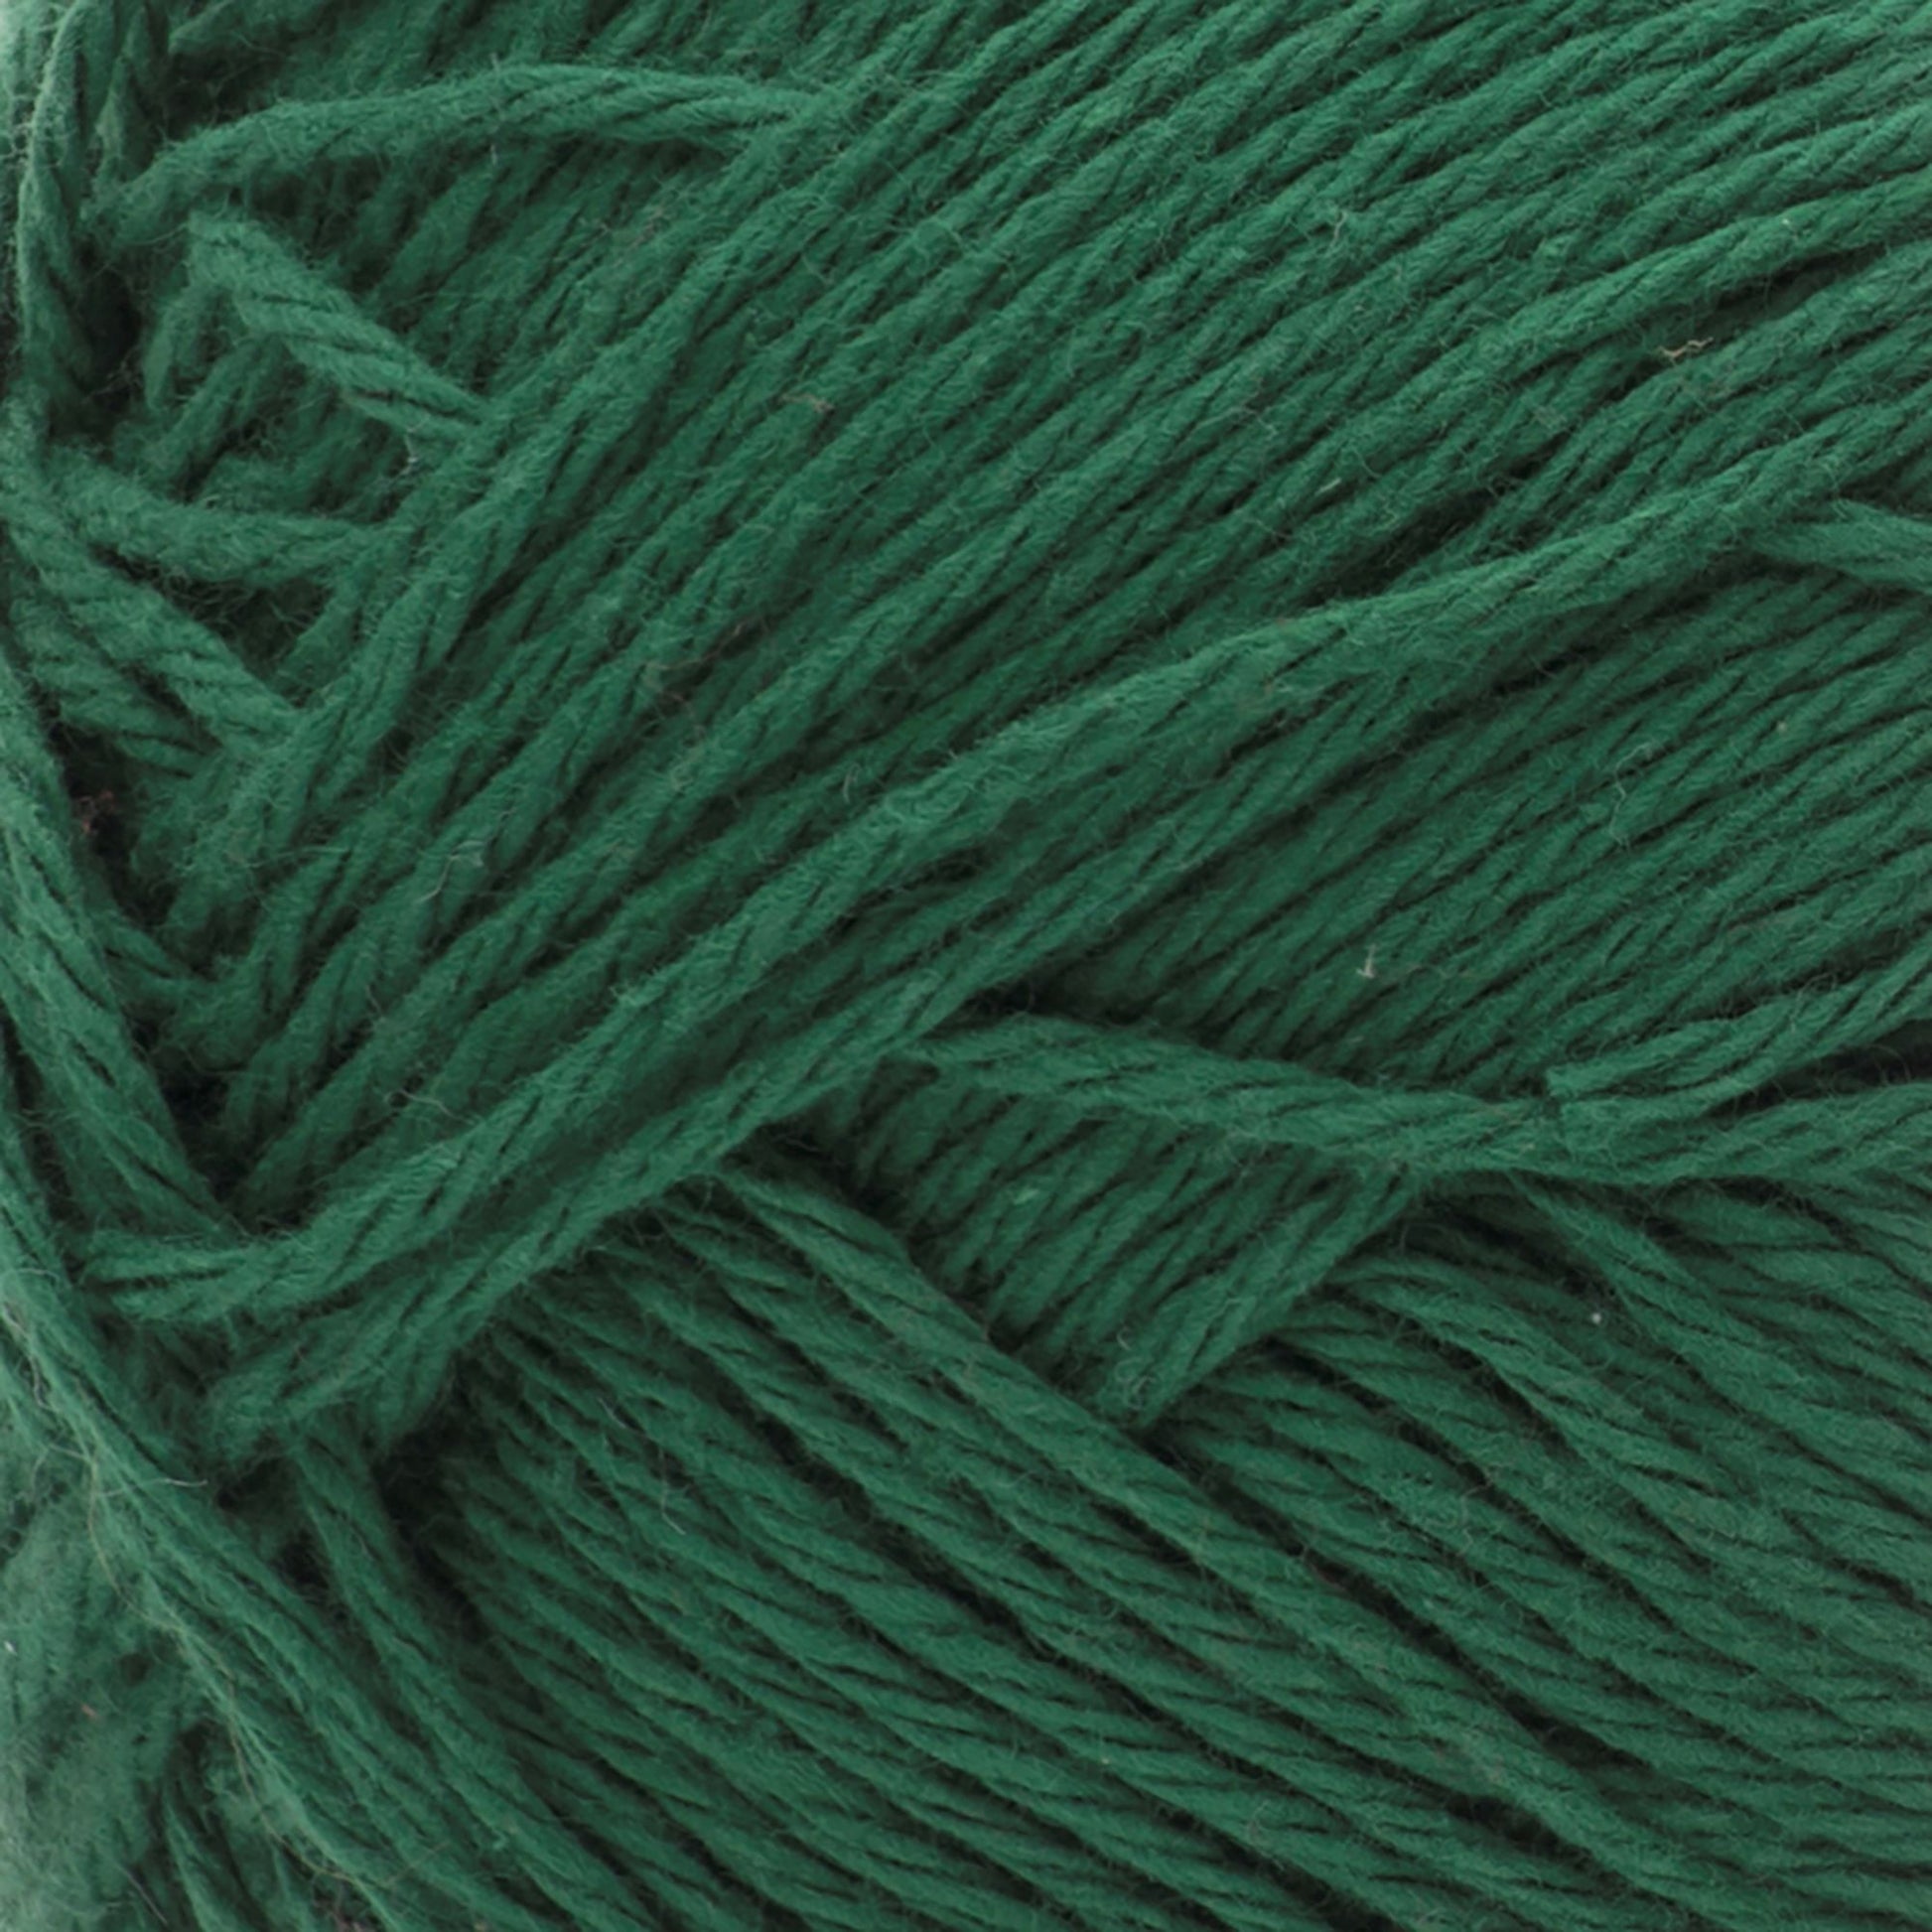 Bernat Handicrafter Cotton Yarn (400g/14oz) - Discontinued Shades